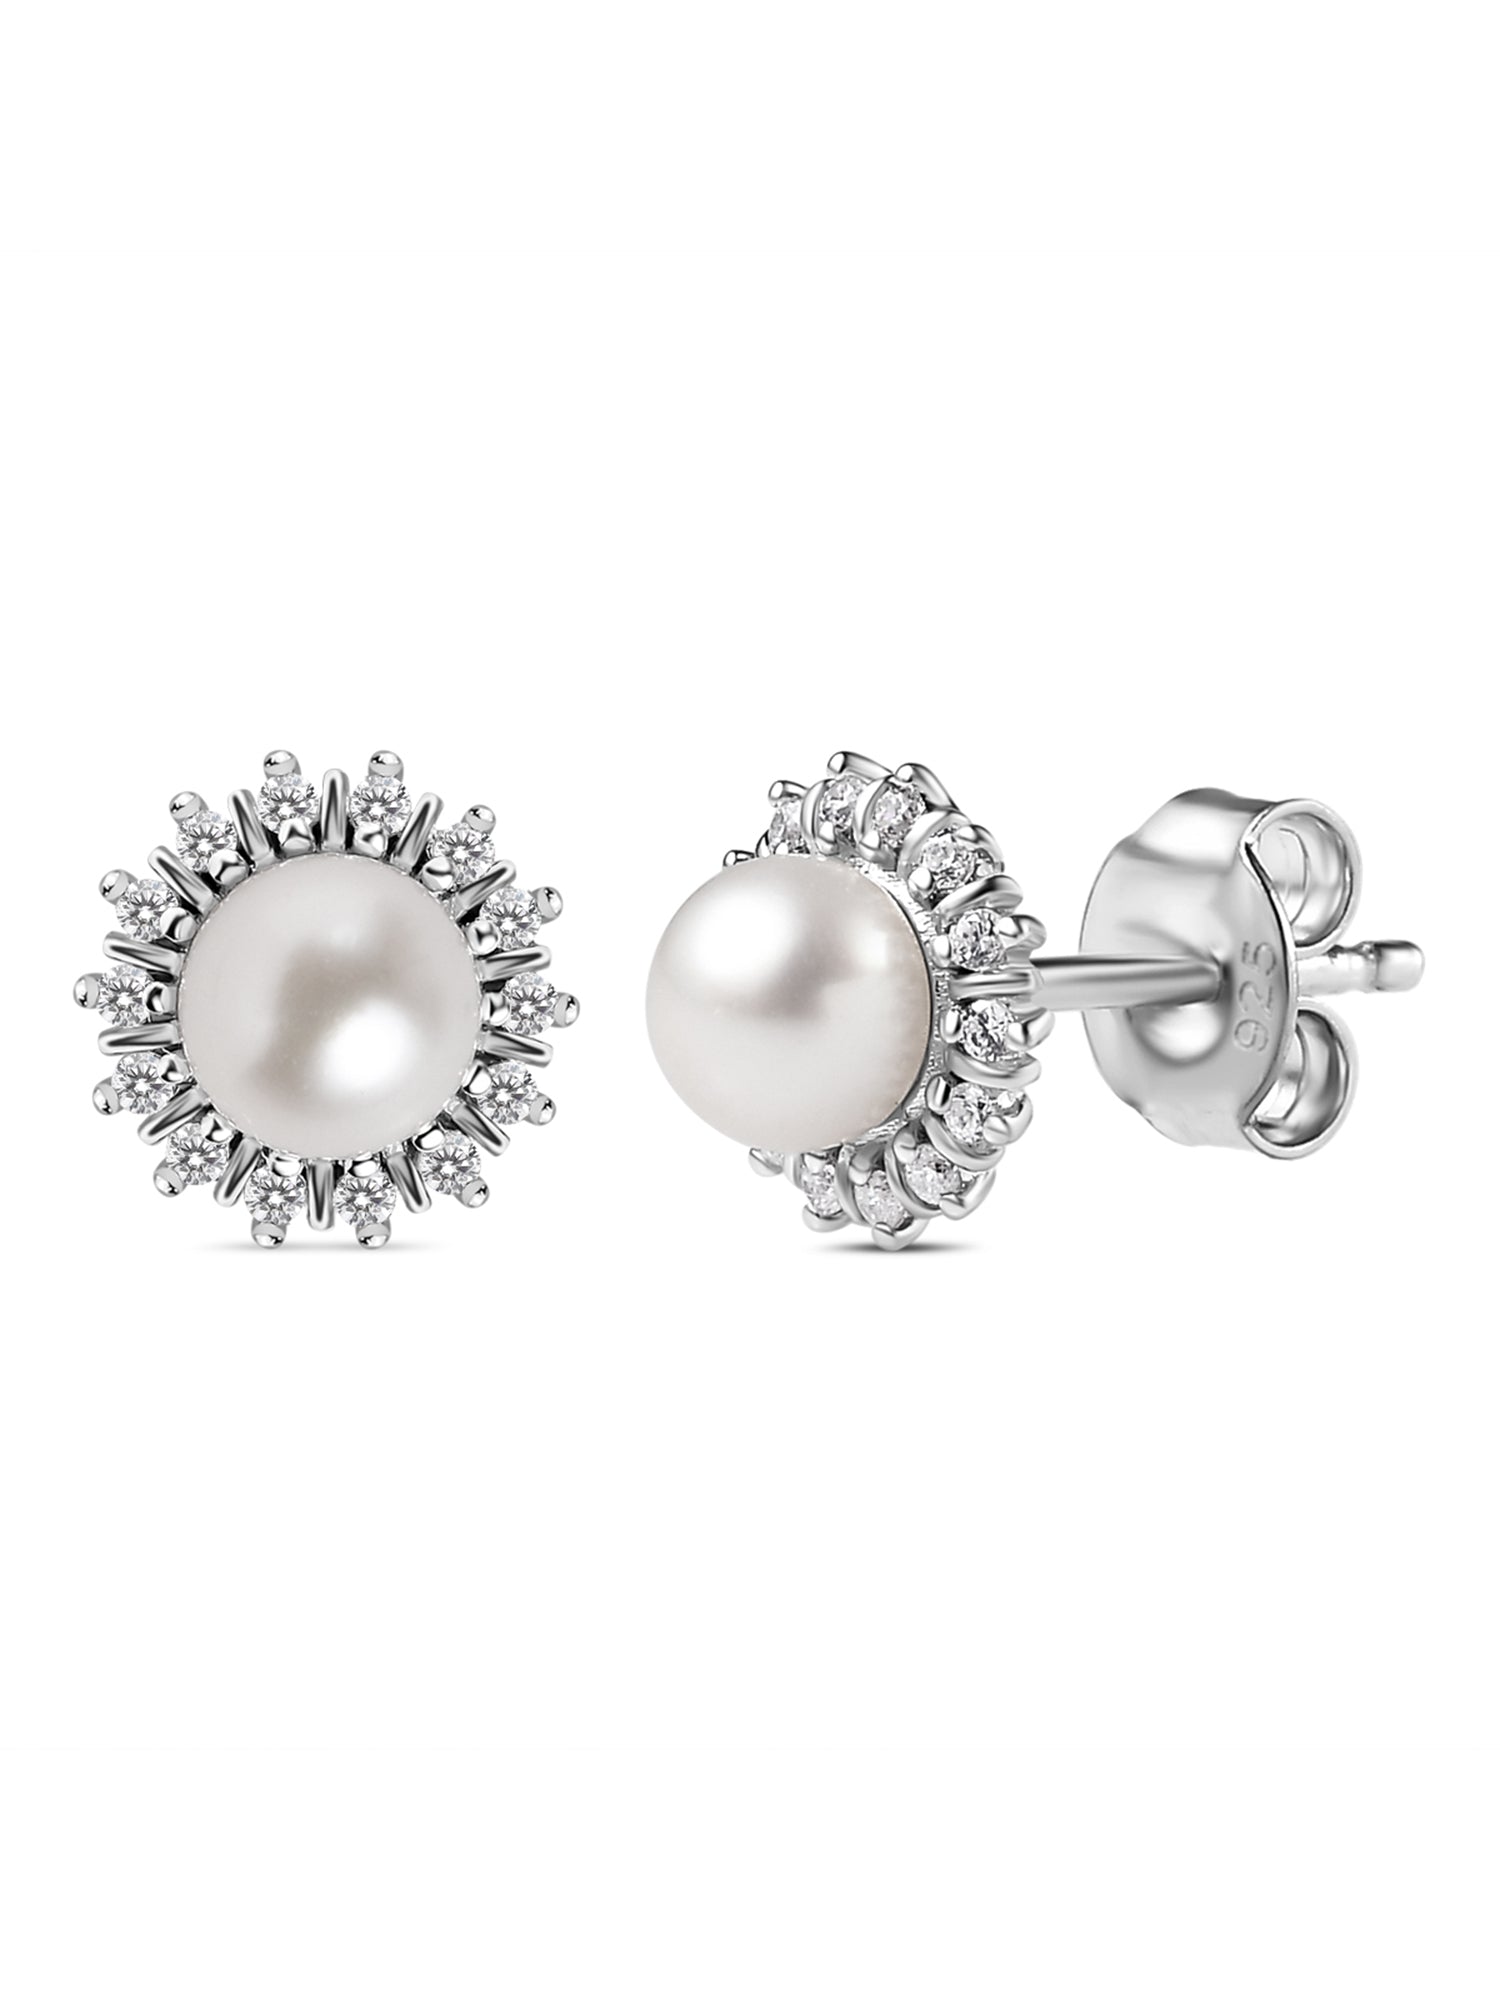 Ornate Jewels Pure Pearl Stud Earrings For Women